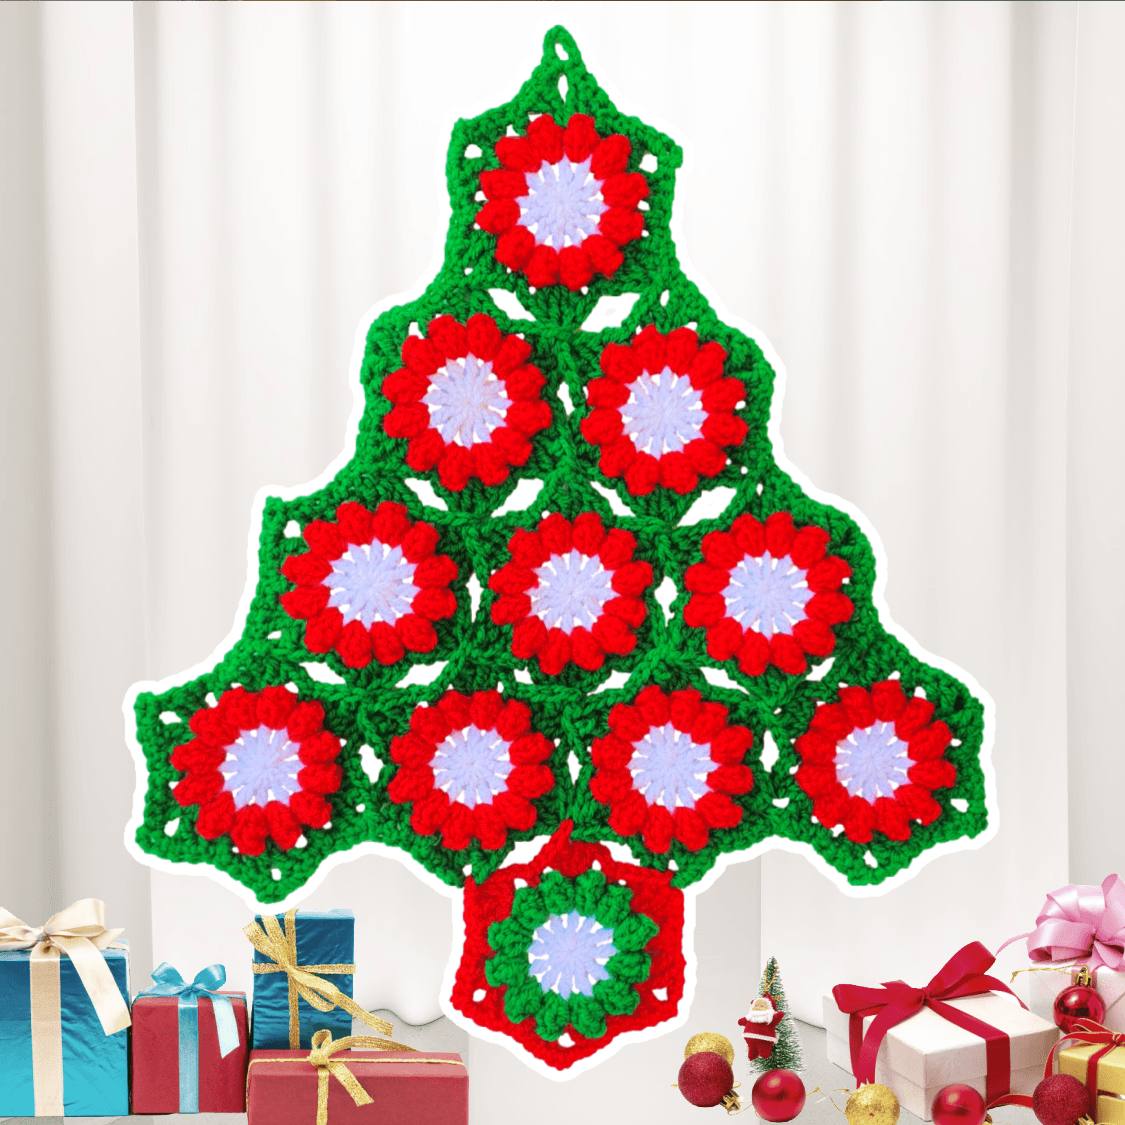 Step-by-Step Crochet Christmas Tree Guide - The Secret Yarnery